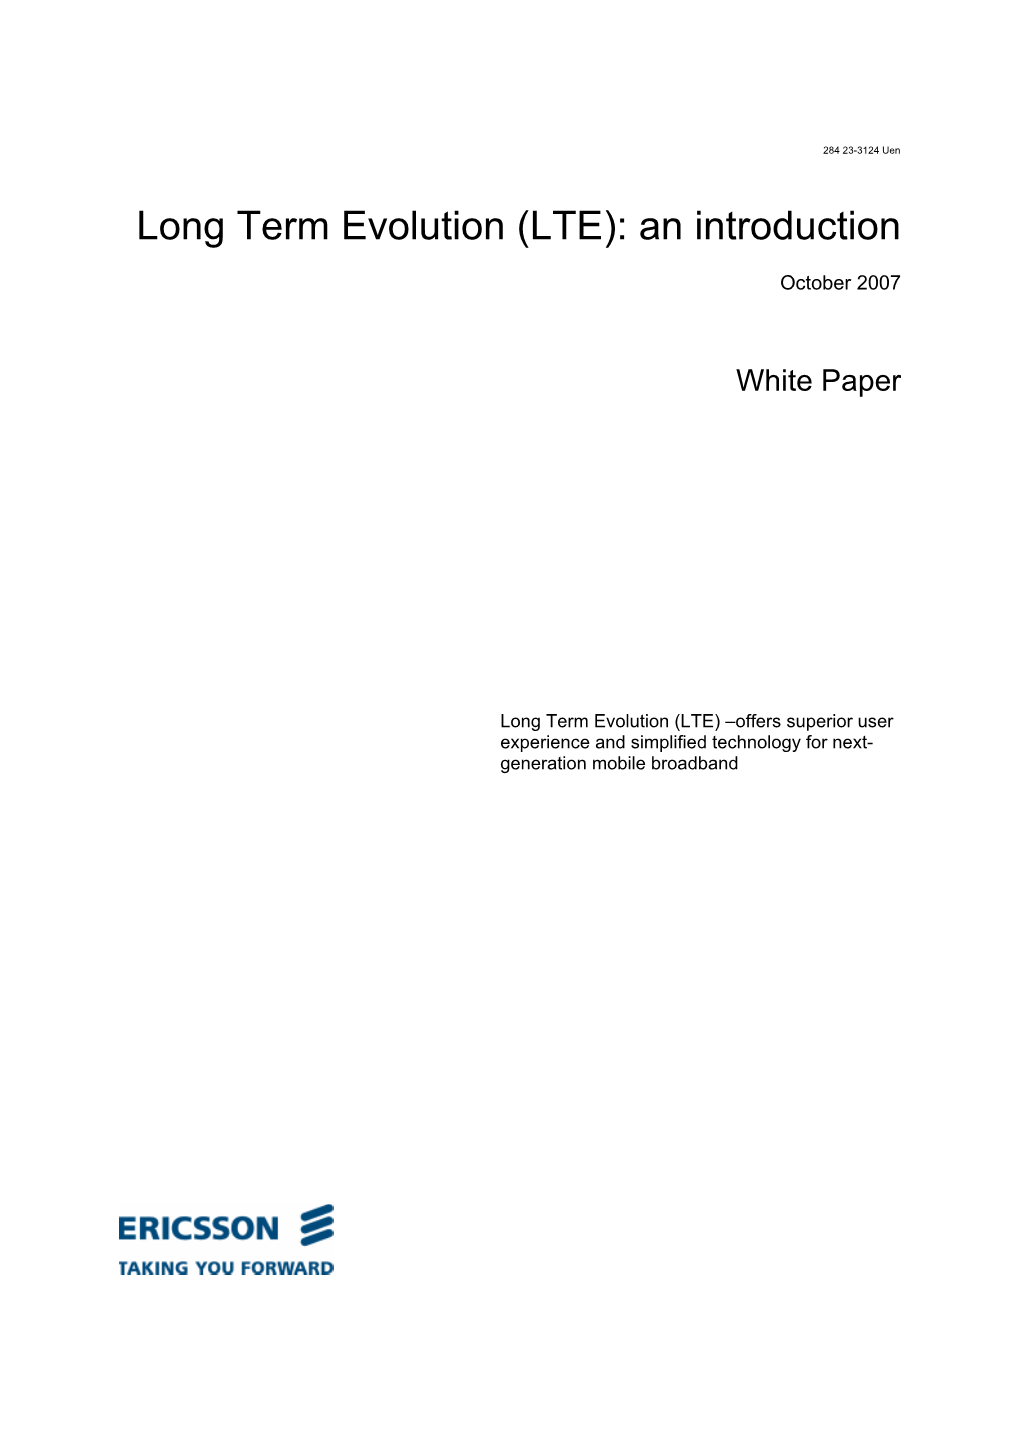 Long Term Evolution (LTE): an Introduction